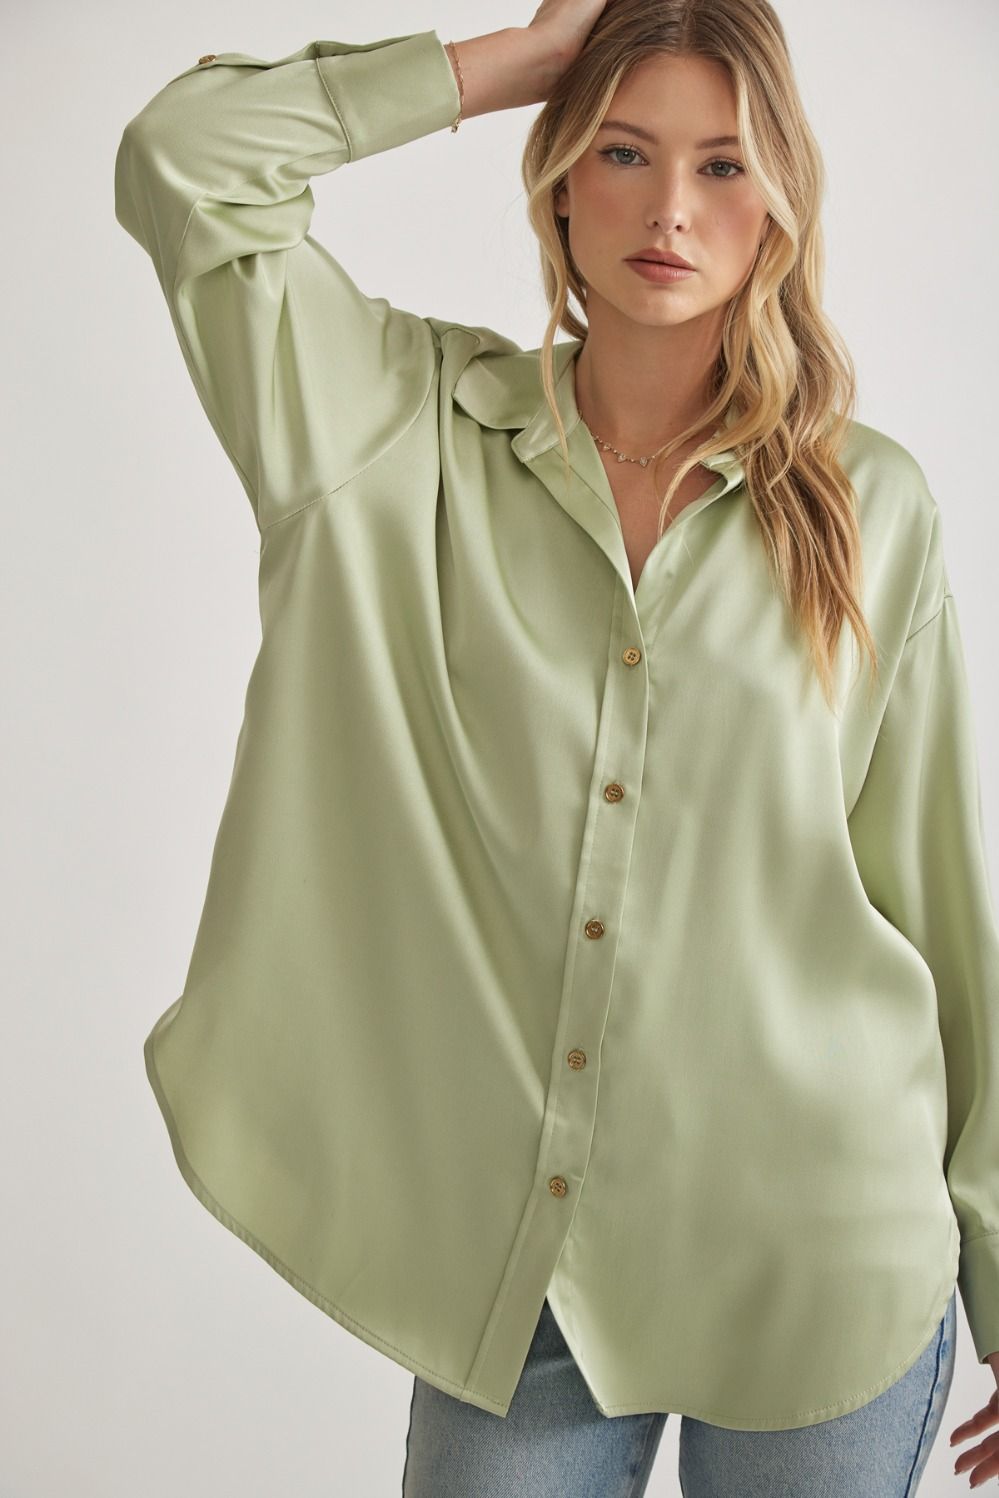 Amanda Silky Shine Button Up Woven Blouse - Sage Green